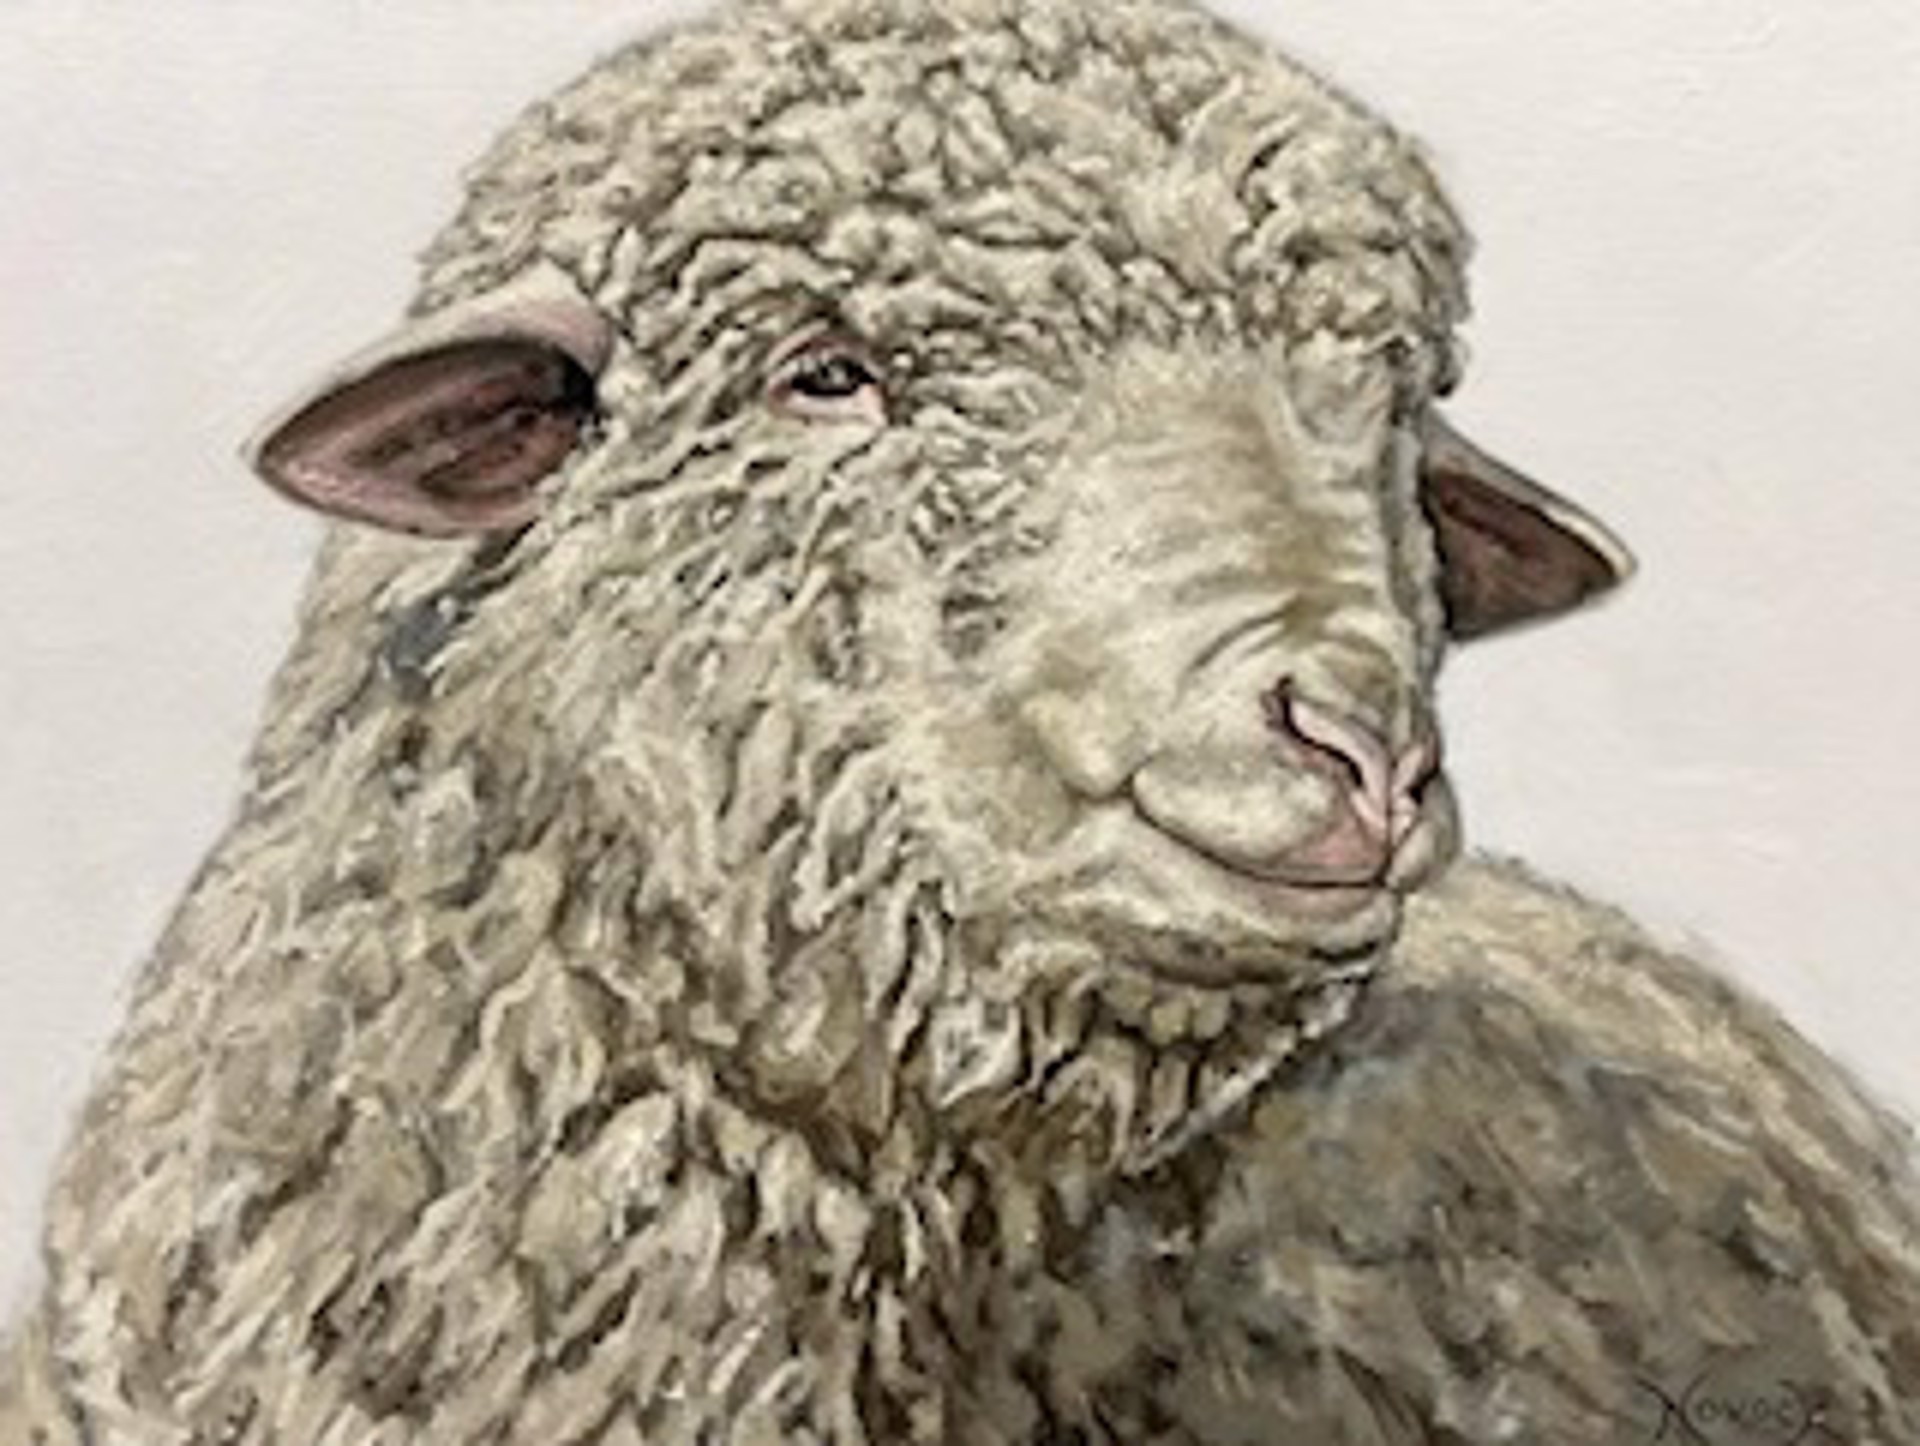 The Good Shepherd by Nathan Novack